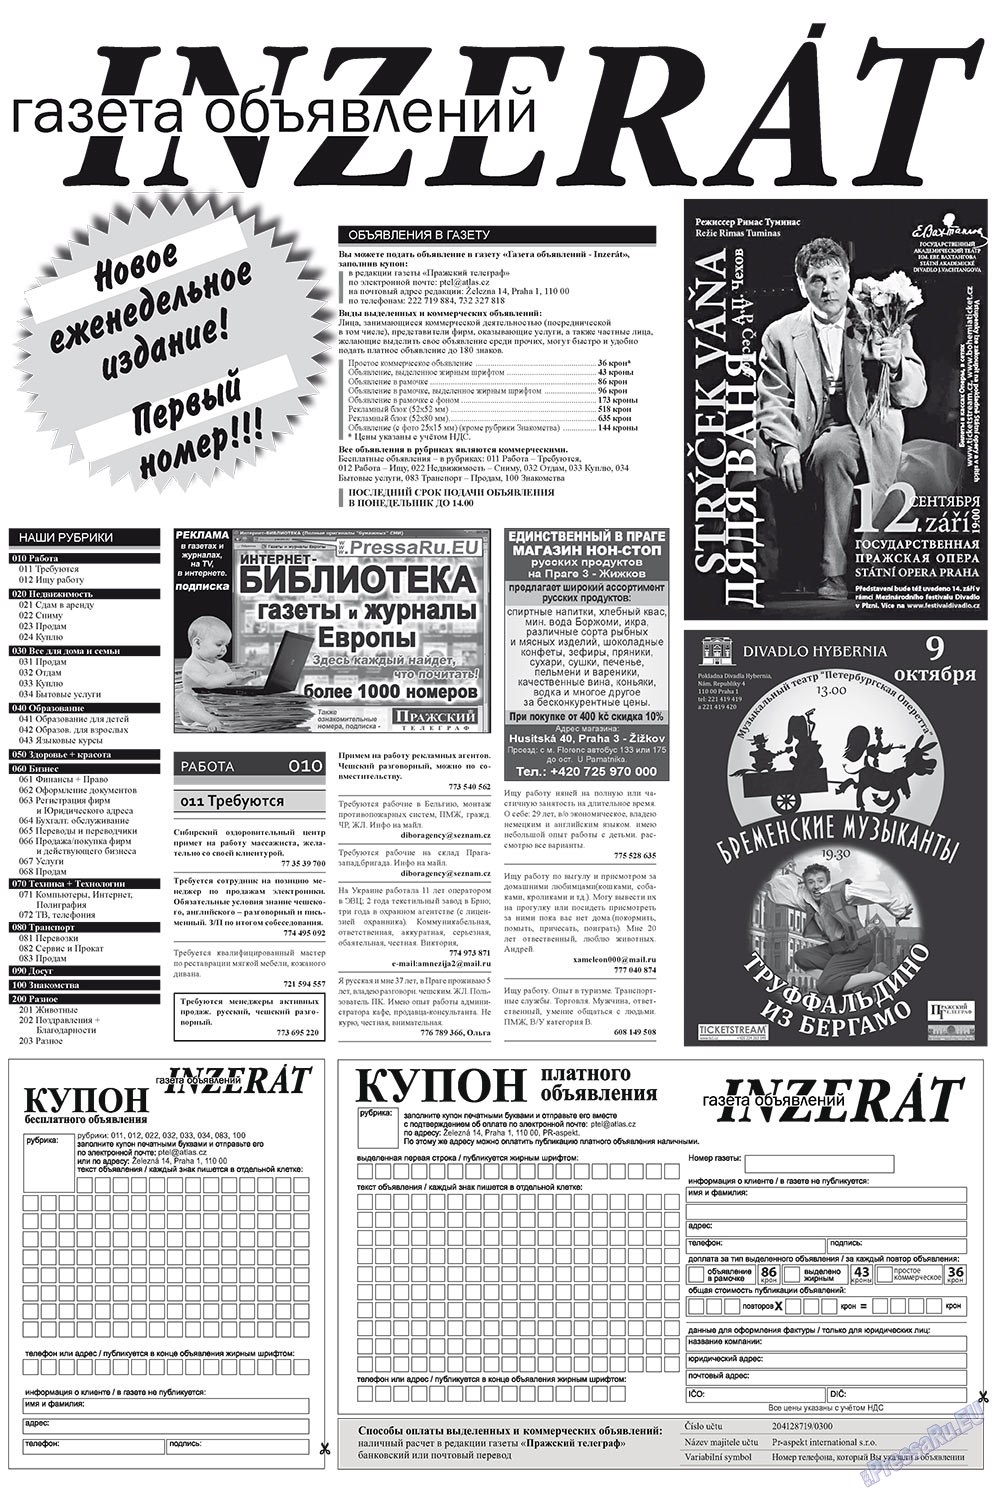 Пражский телеграф, газета. 2011 №36 стр.14